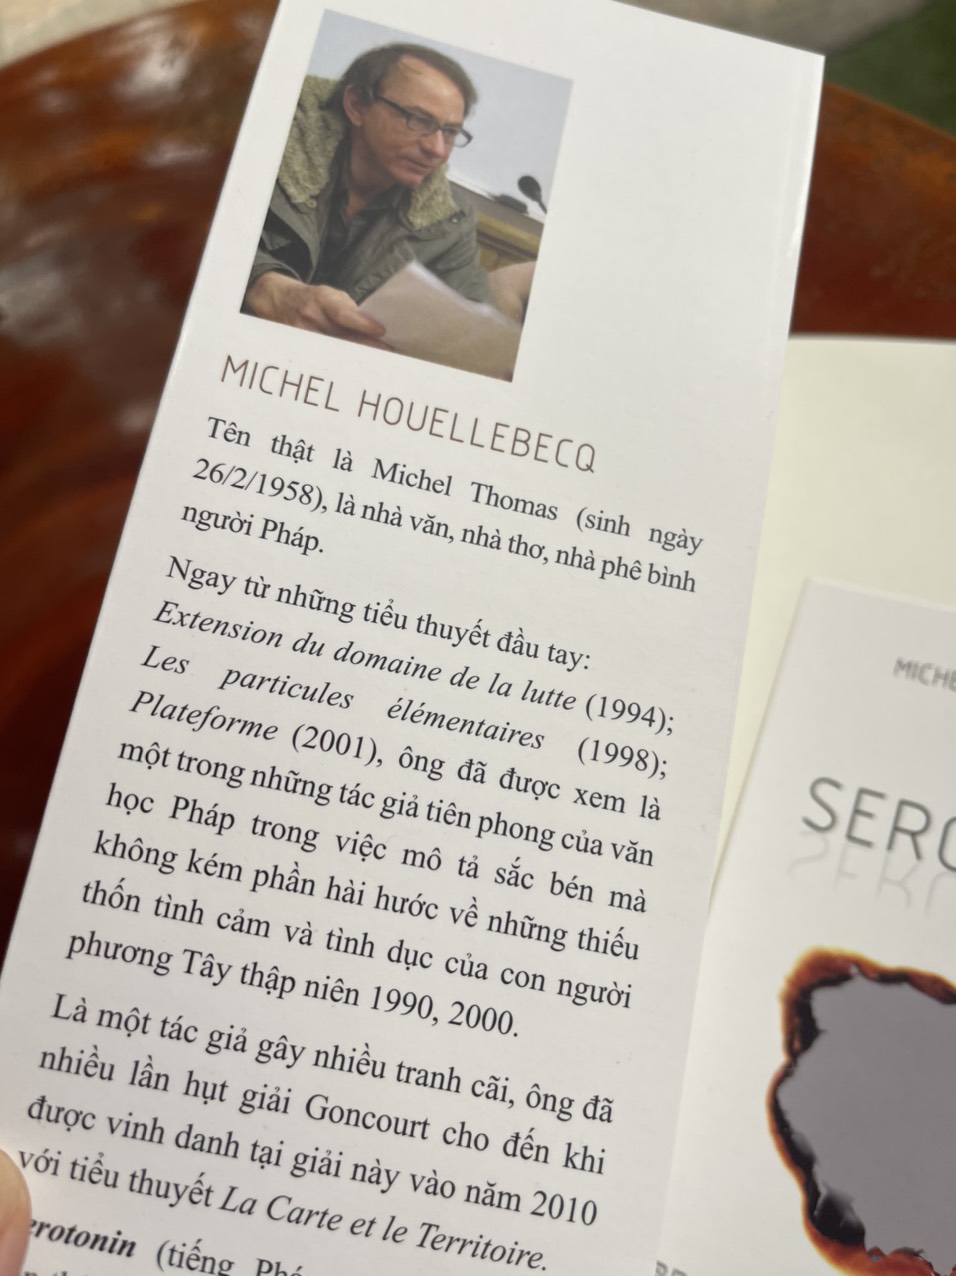 SEROTONIN – Mechel Houellebecq – Thuận dịch – Phanbook – bìa mềm